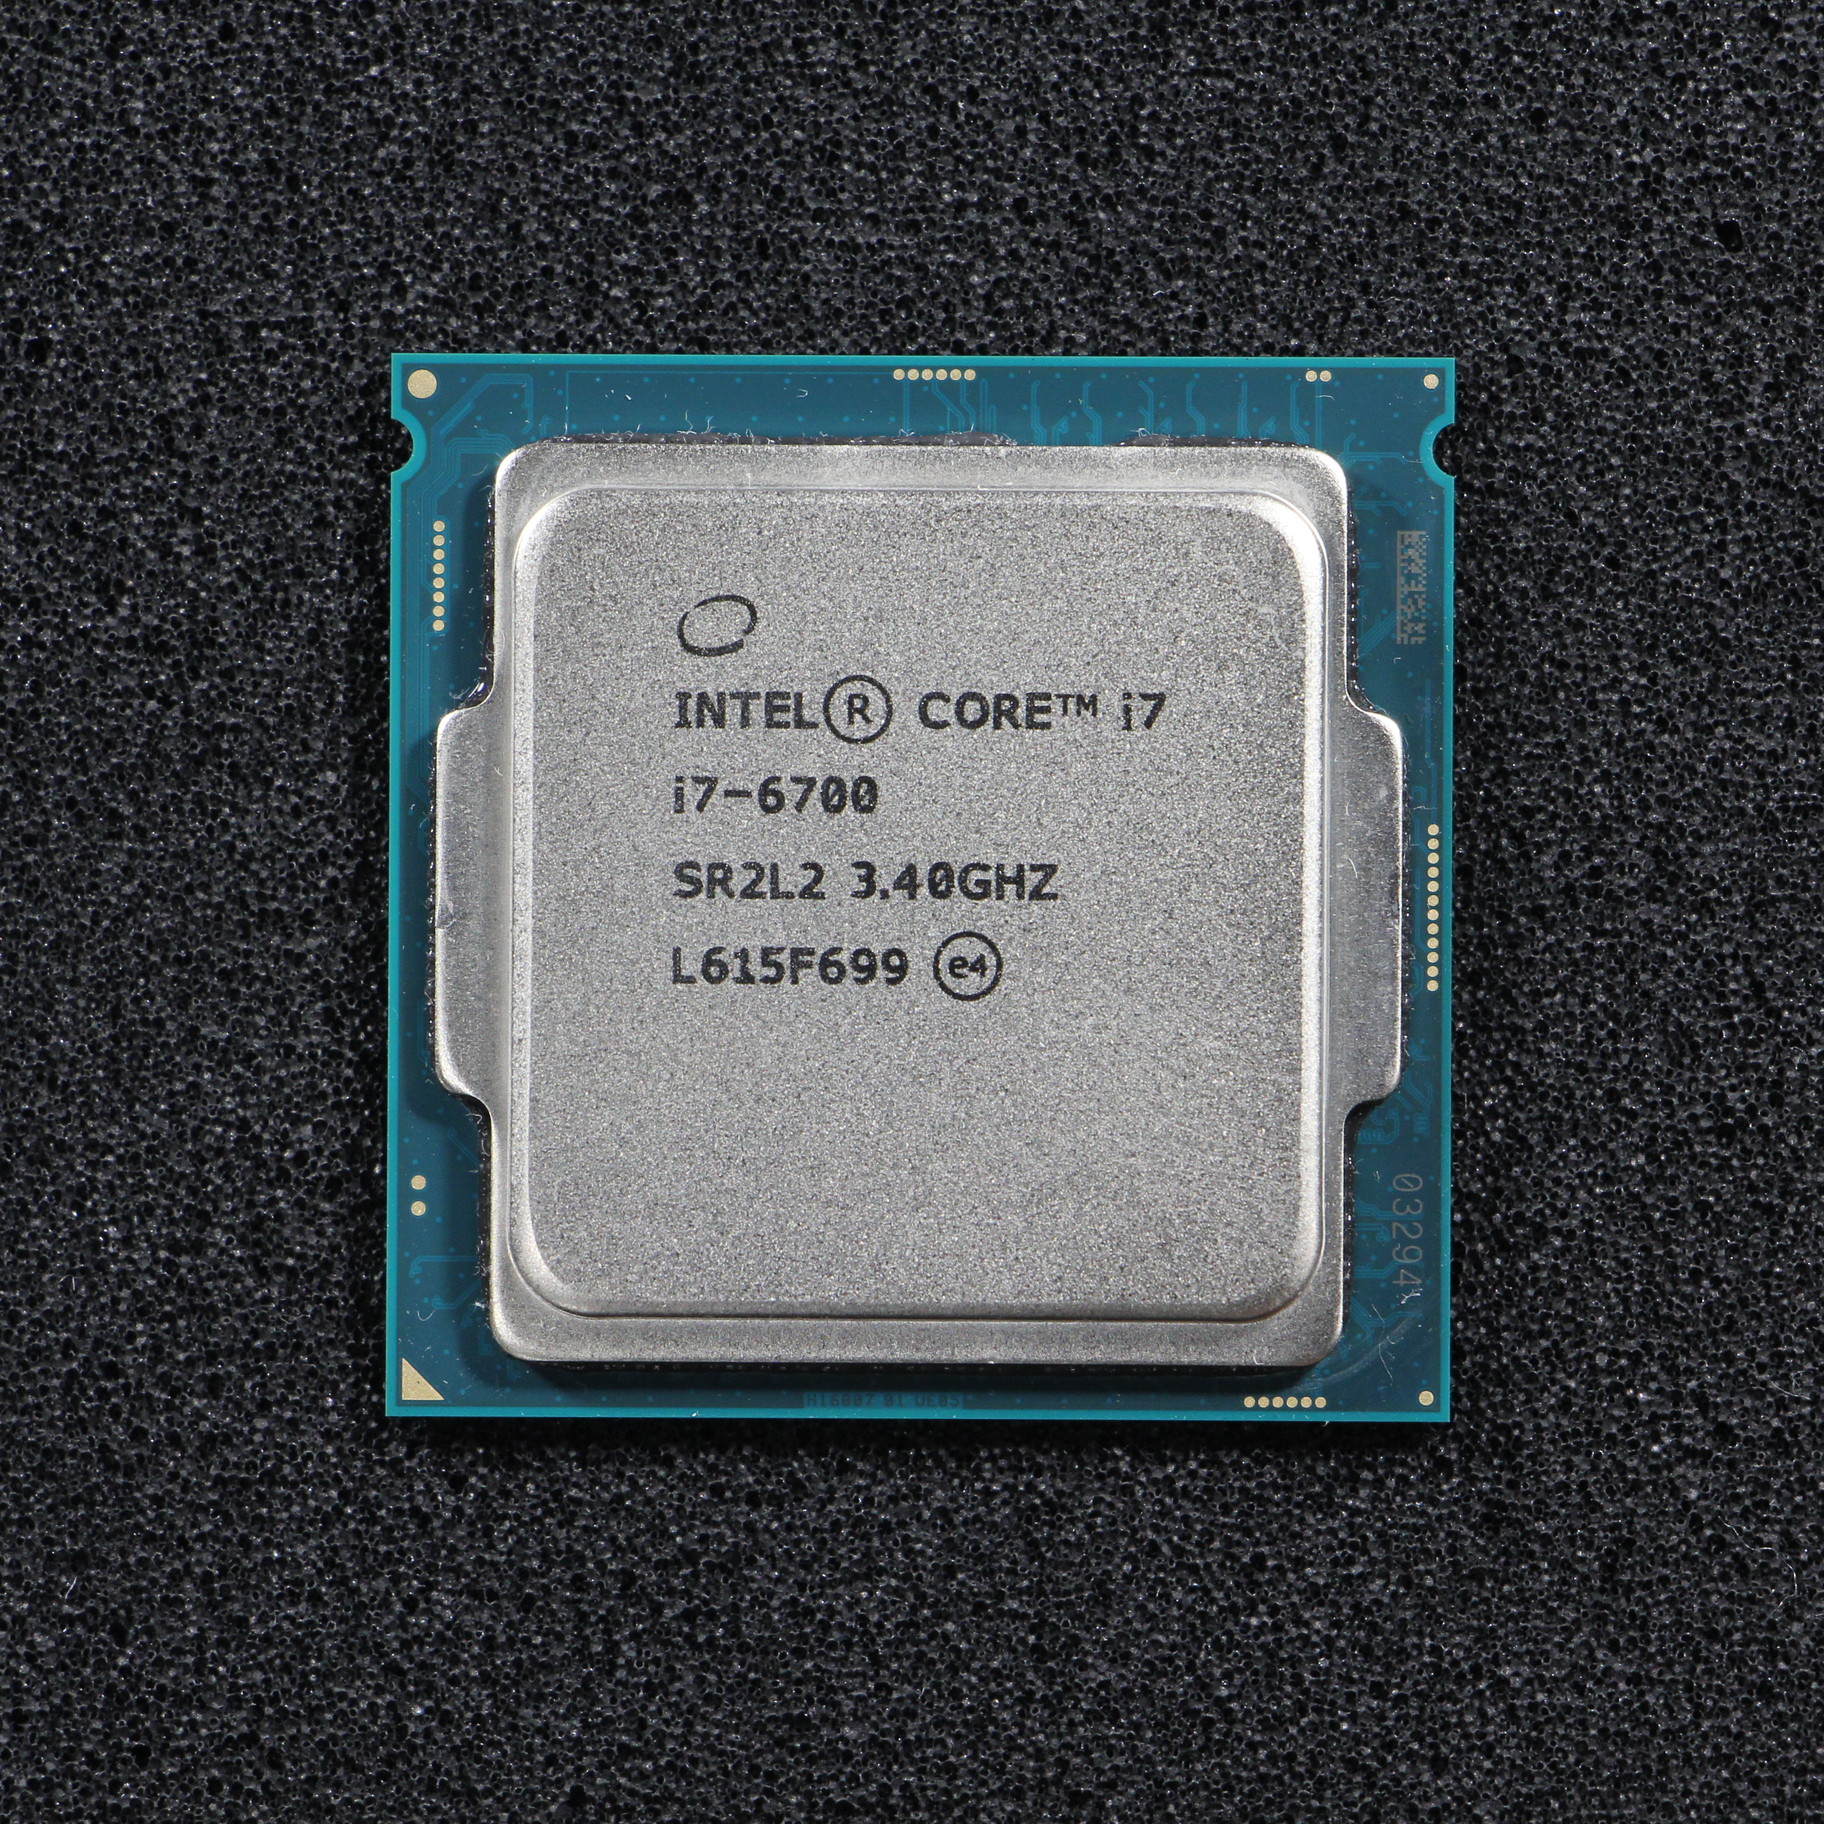 Intel インテル Core i7 6700 CPU SR2L2